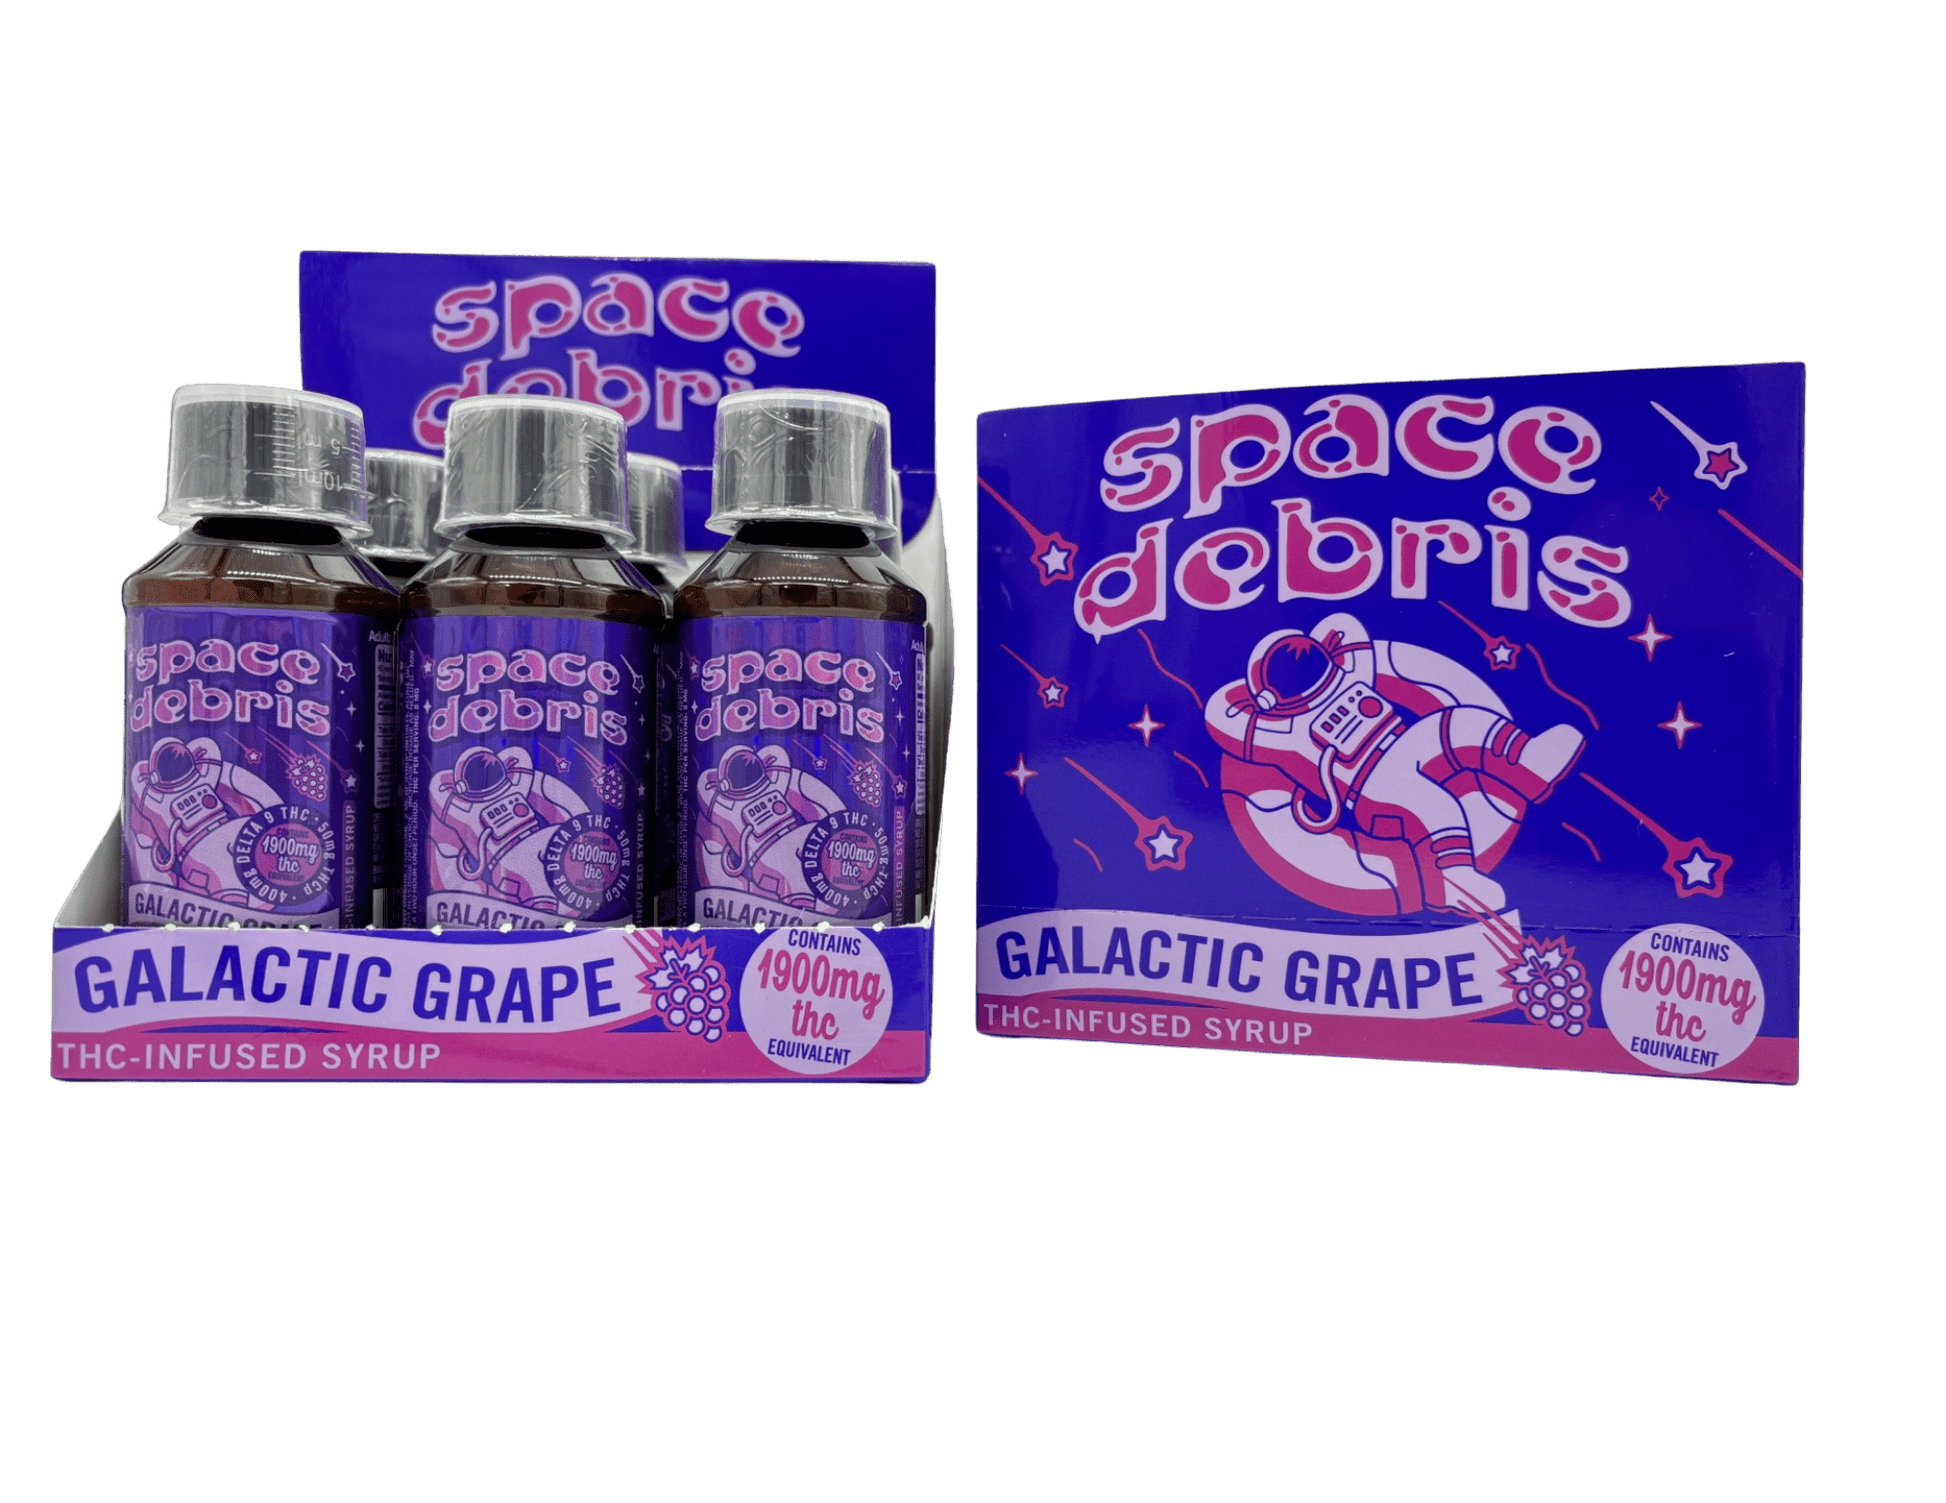 NEW! Space Debris Syrup Galactic Grape 4oz 450mg - 400mg Delta 9 + 50mg THCp Display 6 pack - Tree Spirit Wellness